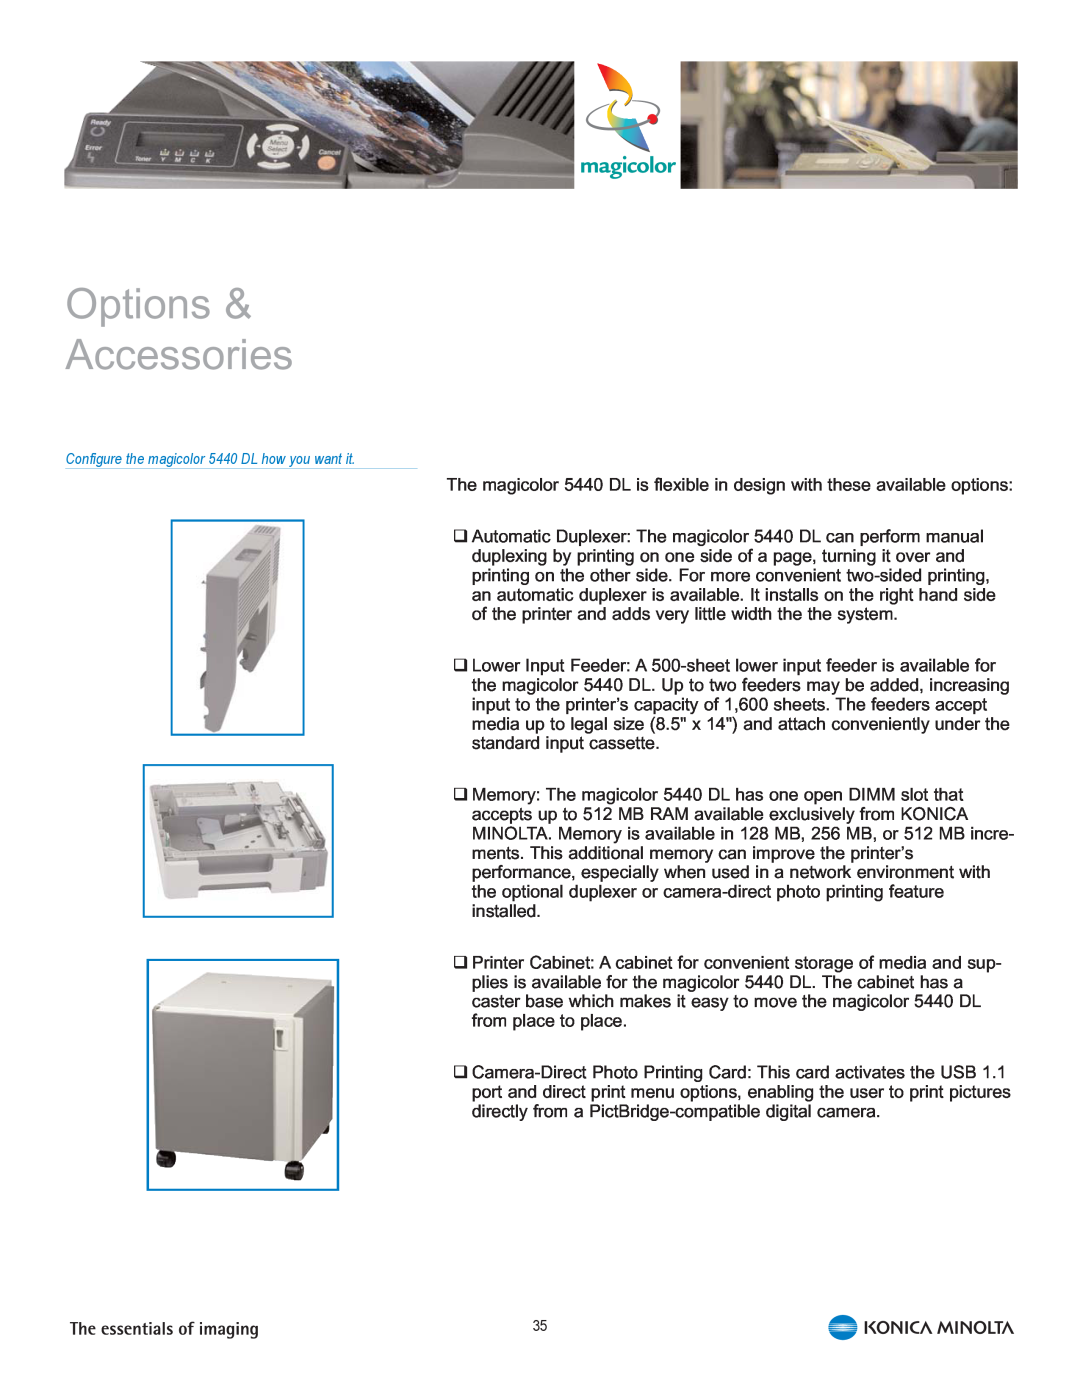 Konica Minolta manual Options & Accessories, Configure the magicolor 5440 DL how you want it 